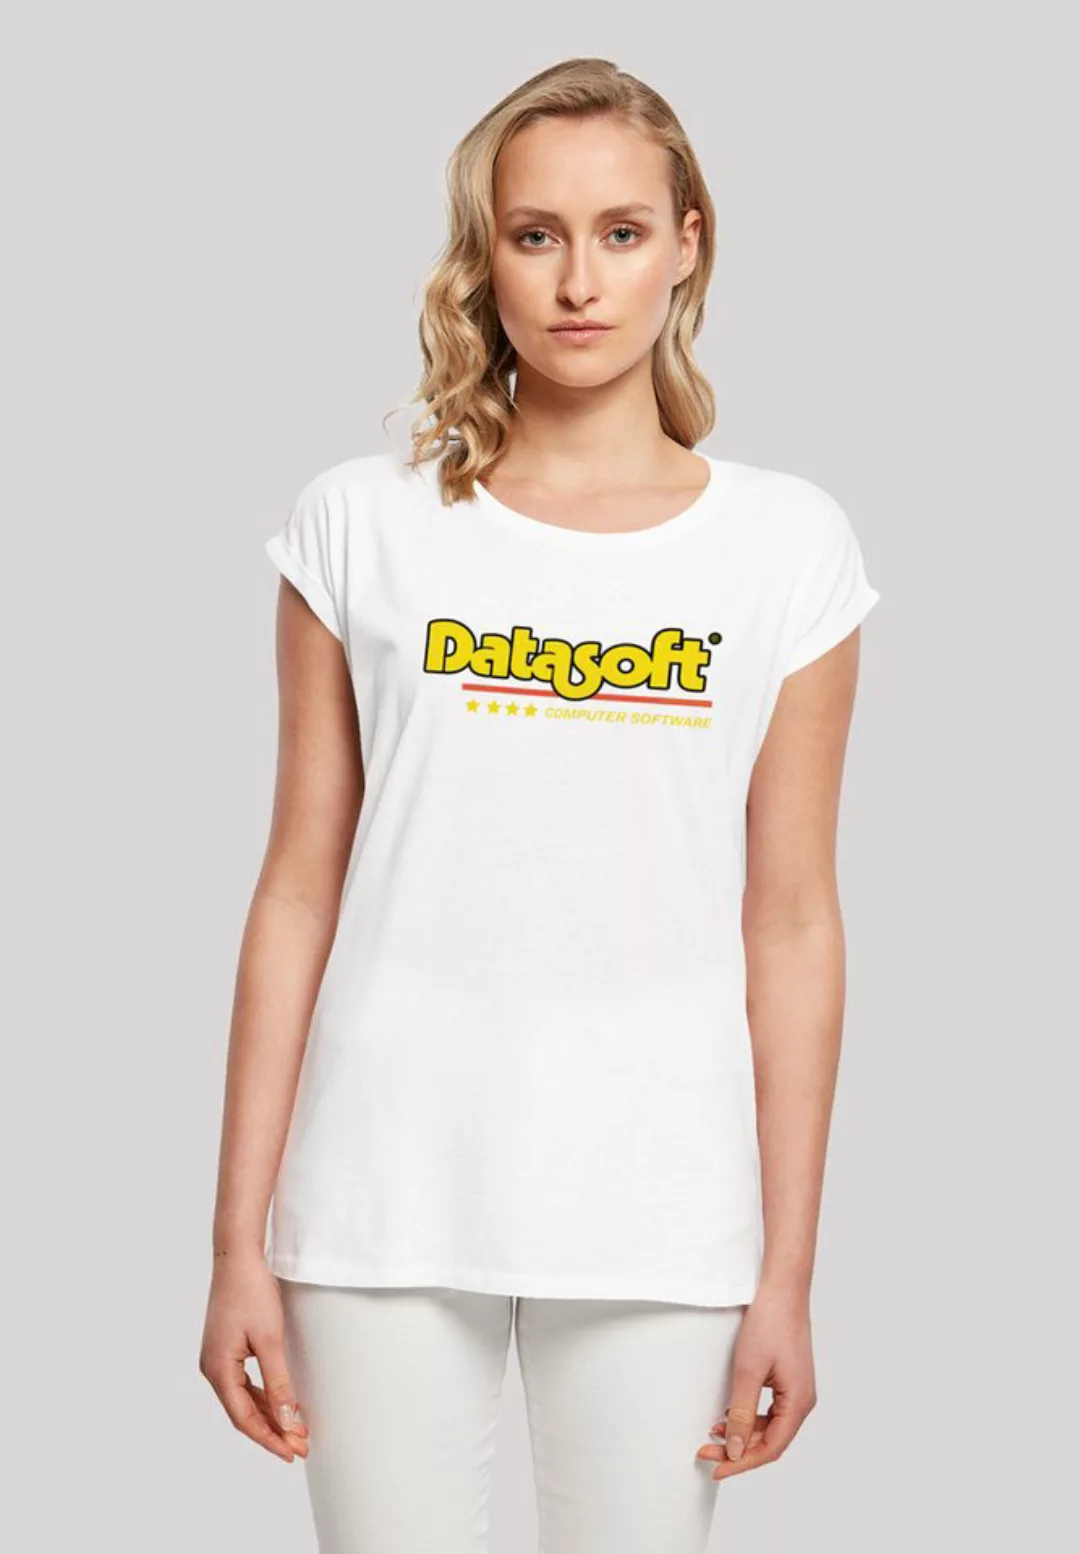 F4NT4STIC T-Shirt "Retro Gaming Datasoft Logo gelb", Print günstig online kaufen